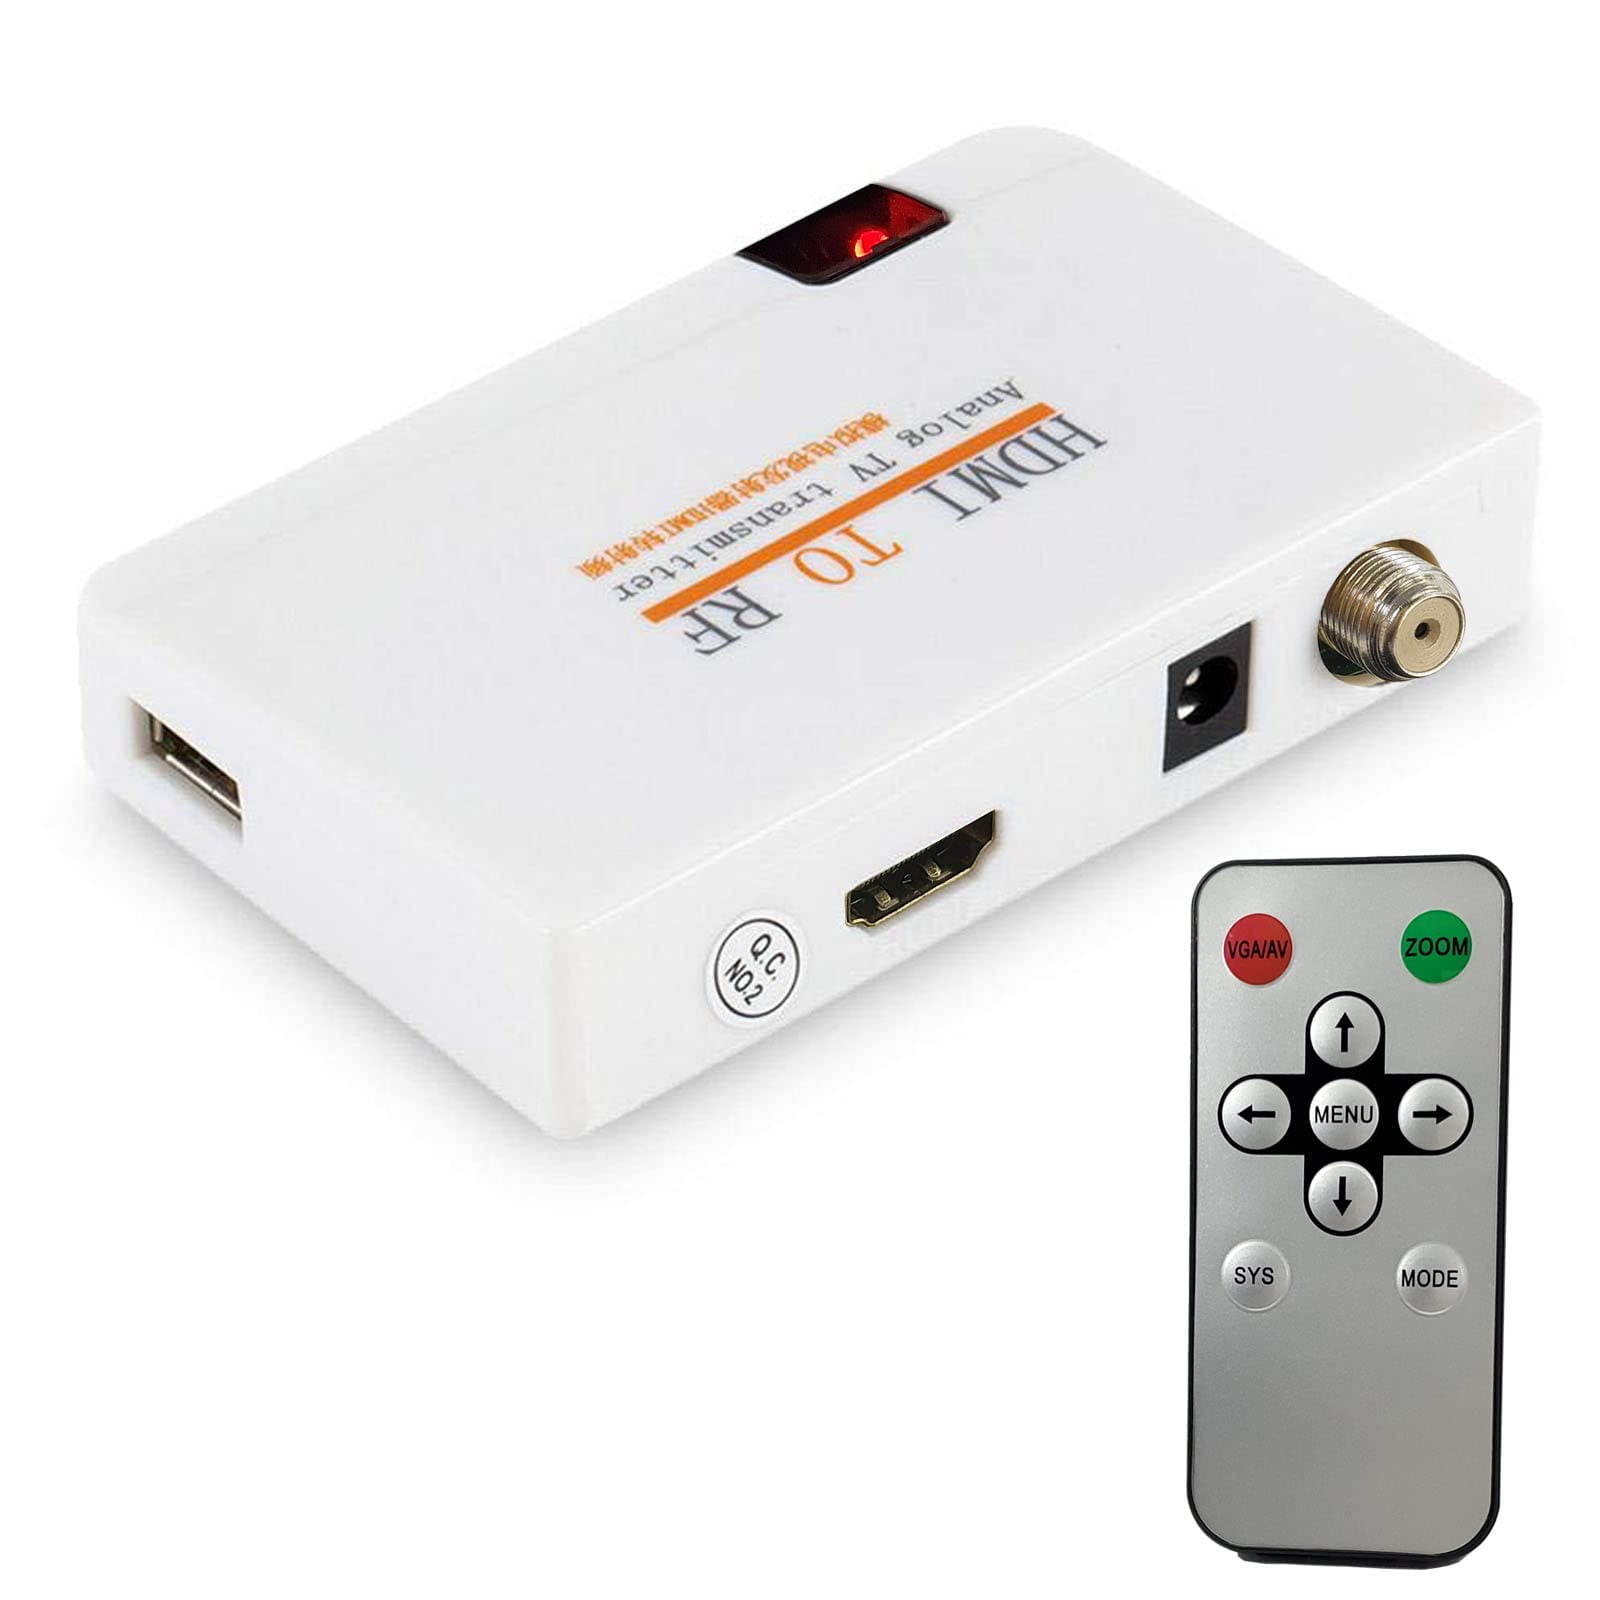 2Pcs 90 Degree HDMI Cable Adapter Converter For TV PS3 Xbox 360 PC DVI HDTV T LD 